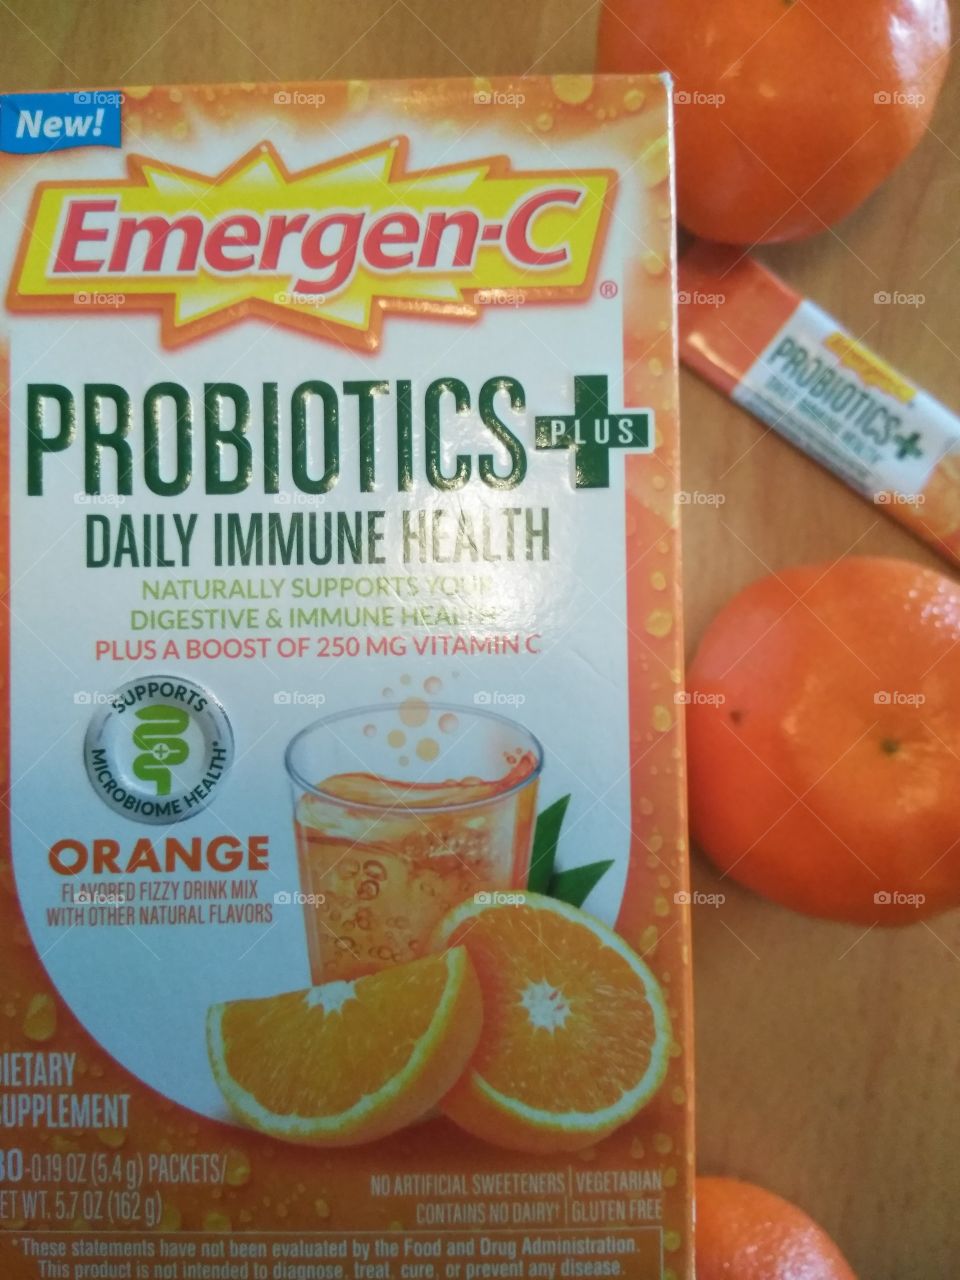 Emergen-C Probiotics for Daily Immune Health!